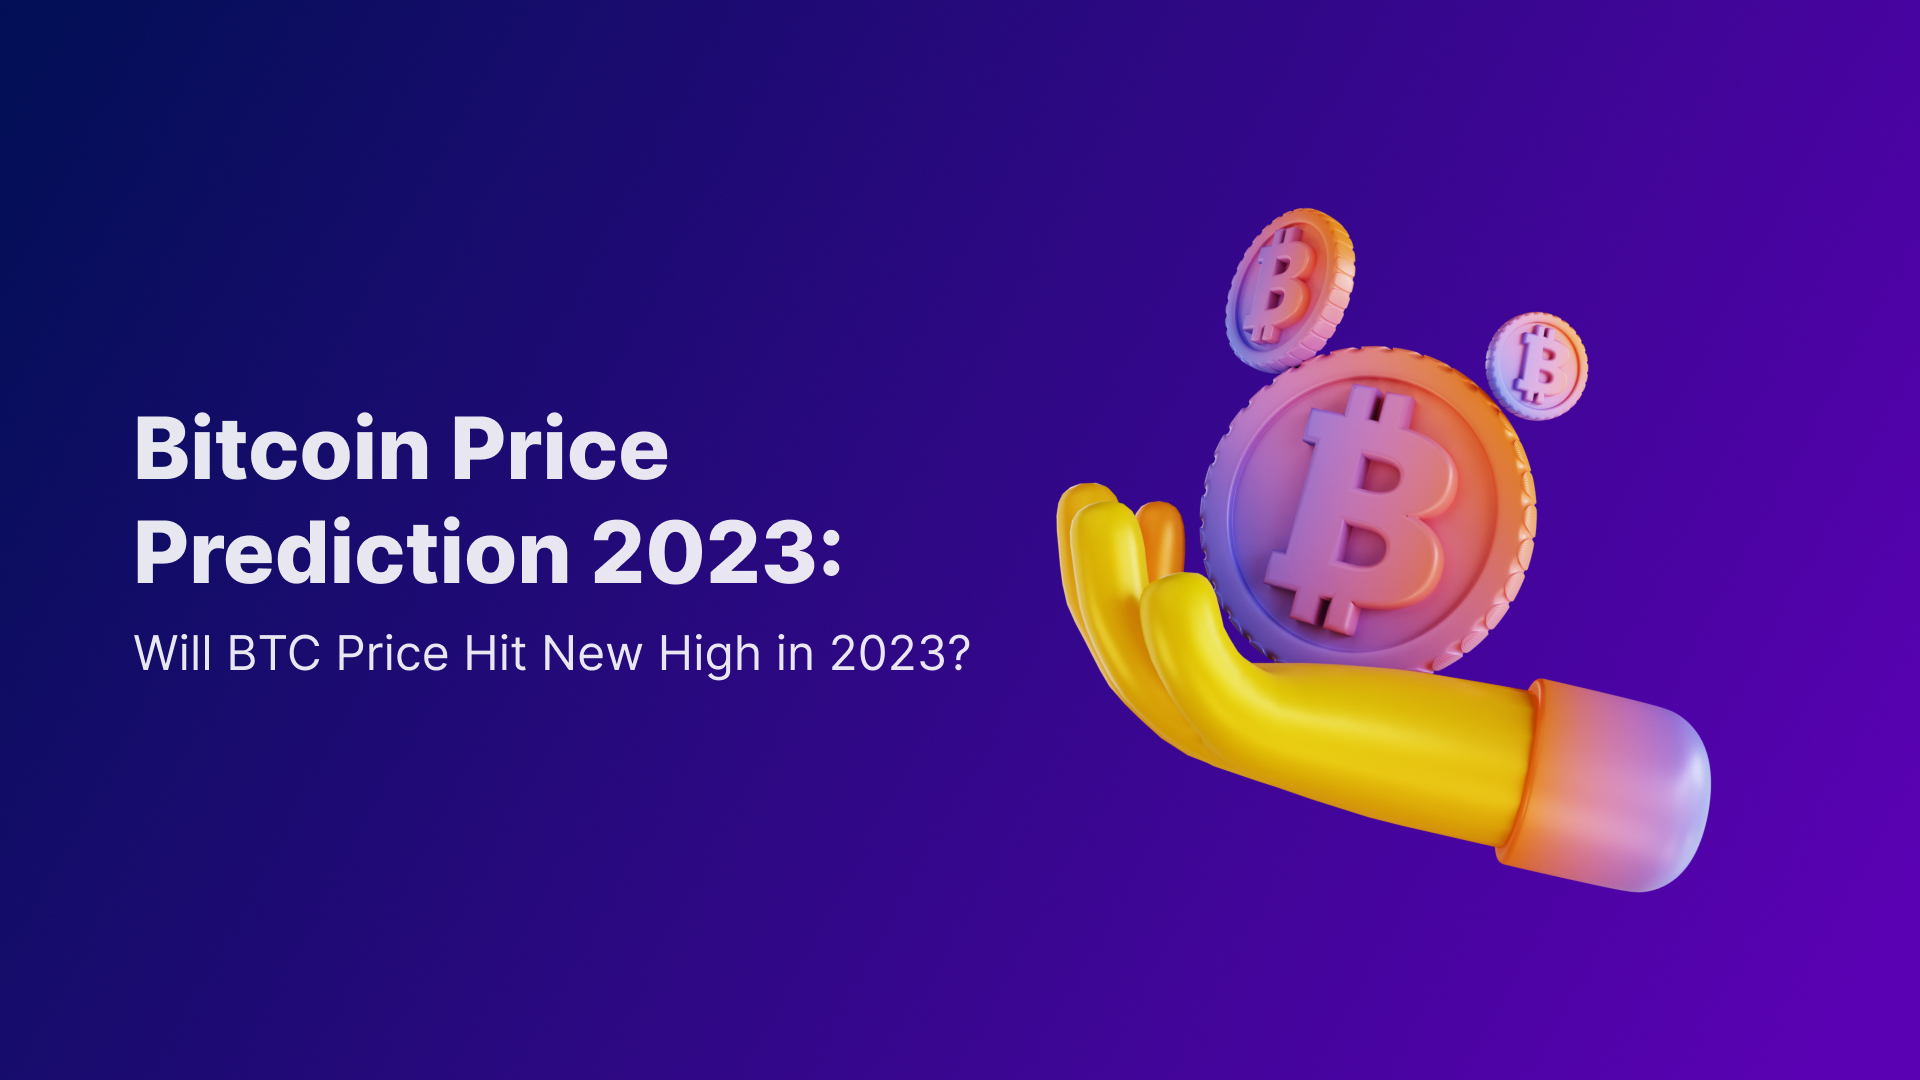 Bitcoin Price Prediction 2023: Will BTC Price Hit New High in 2023?